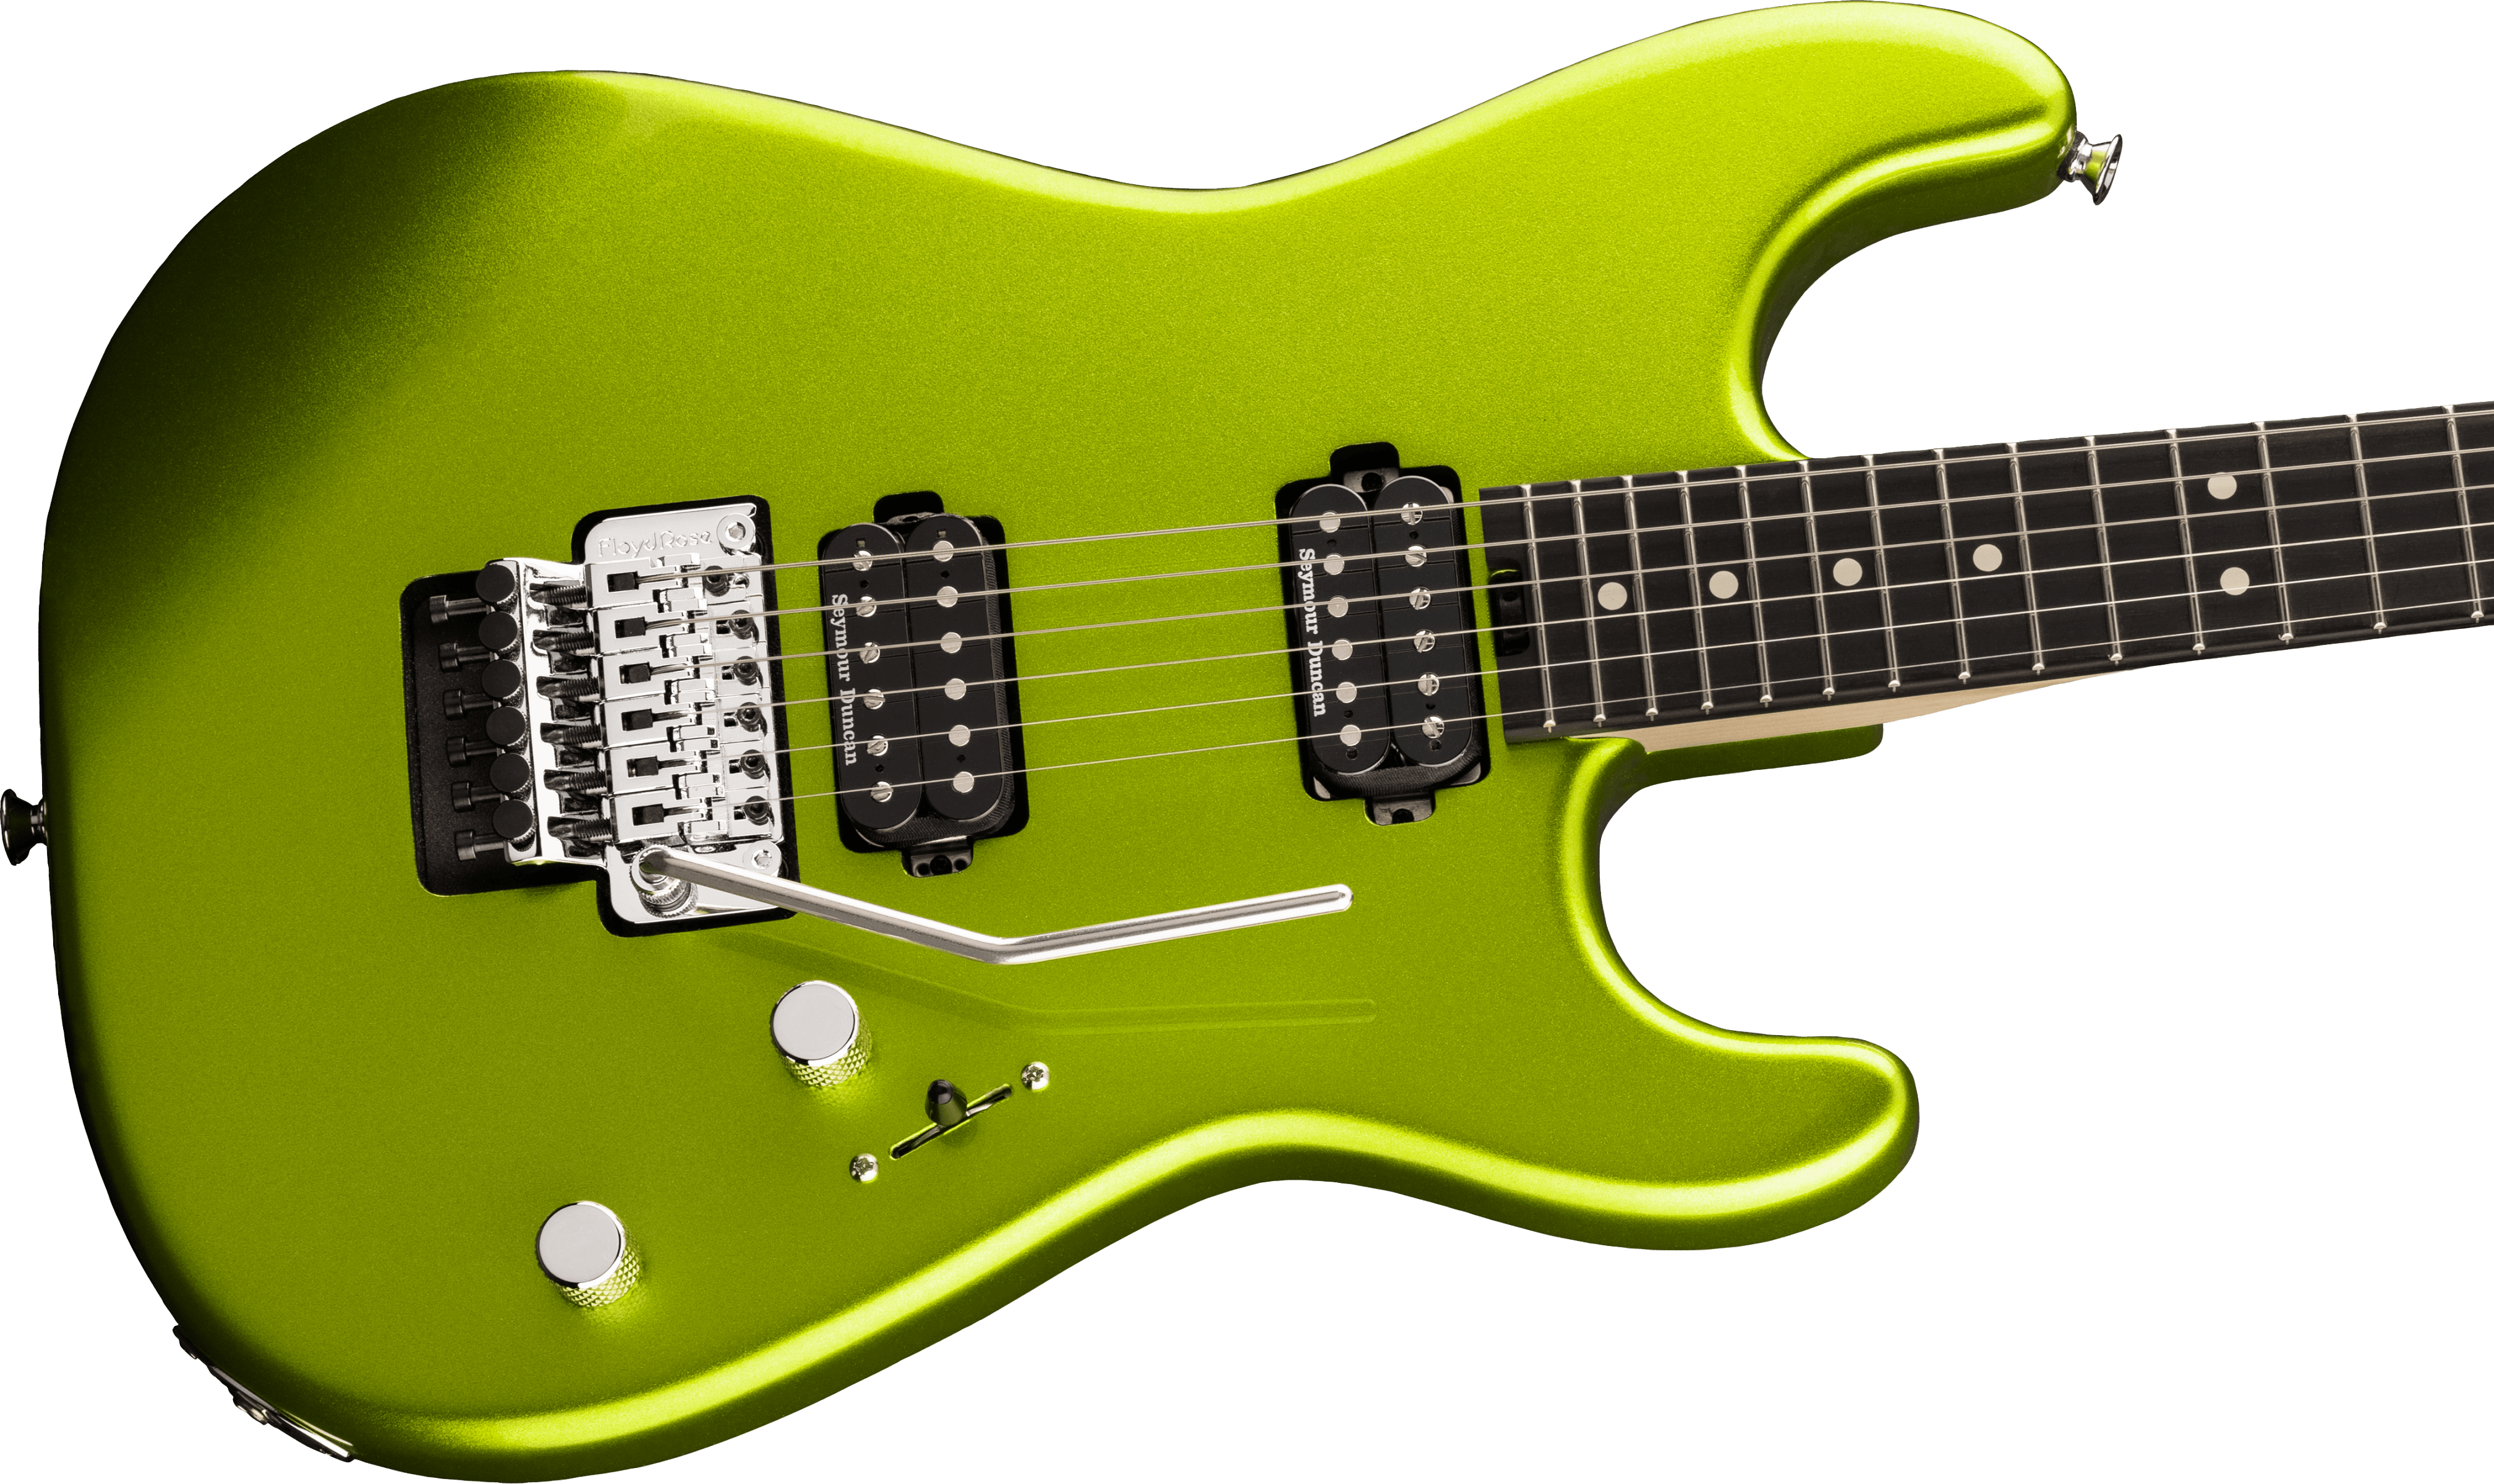 Charvel San Dimas Style 1 Hh Fr E Pro-mod Seymour Duncan Eb - Lime Green Metallic - Str shape electric guitar - Variation 3